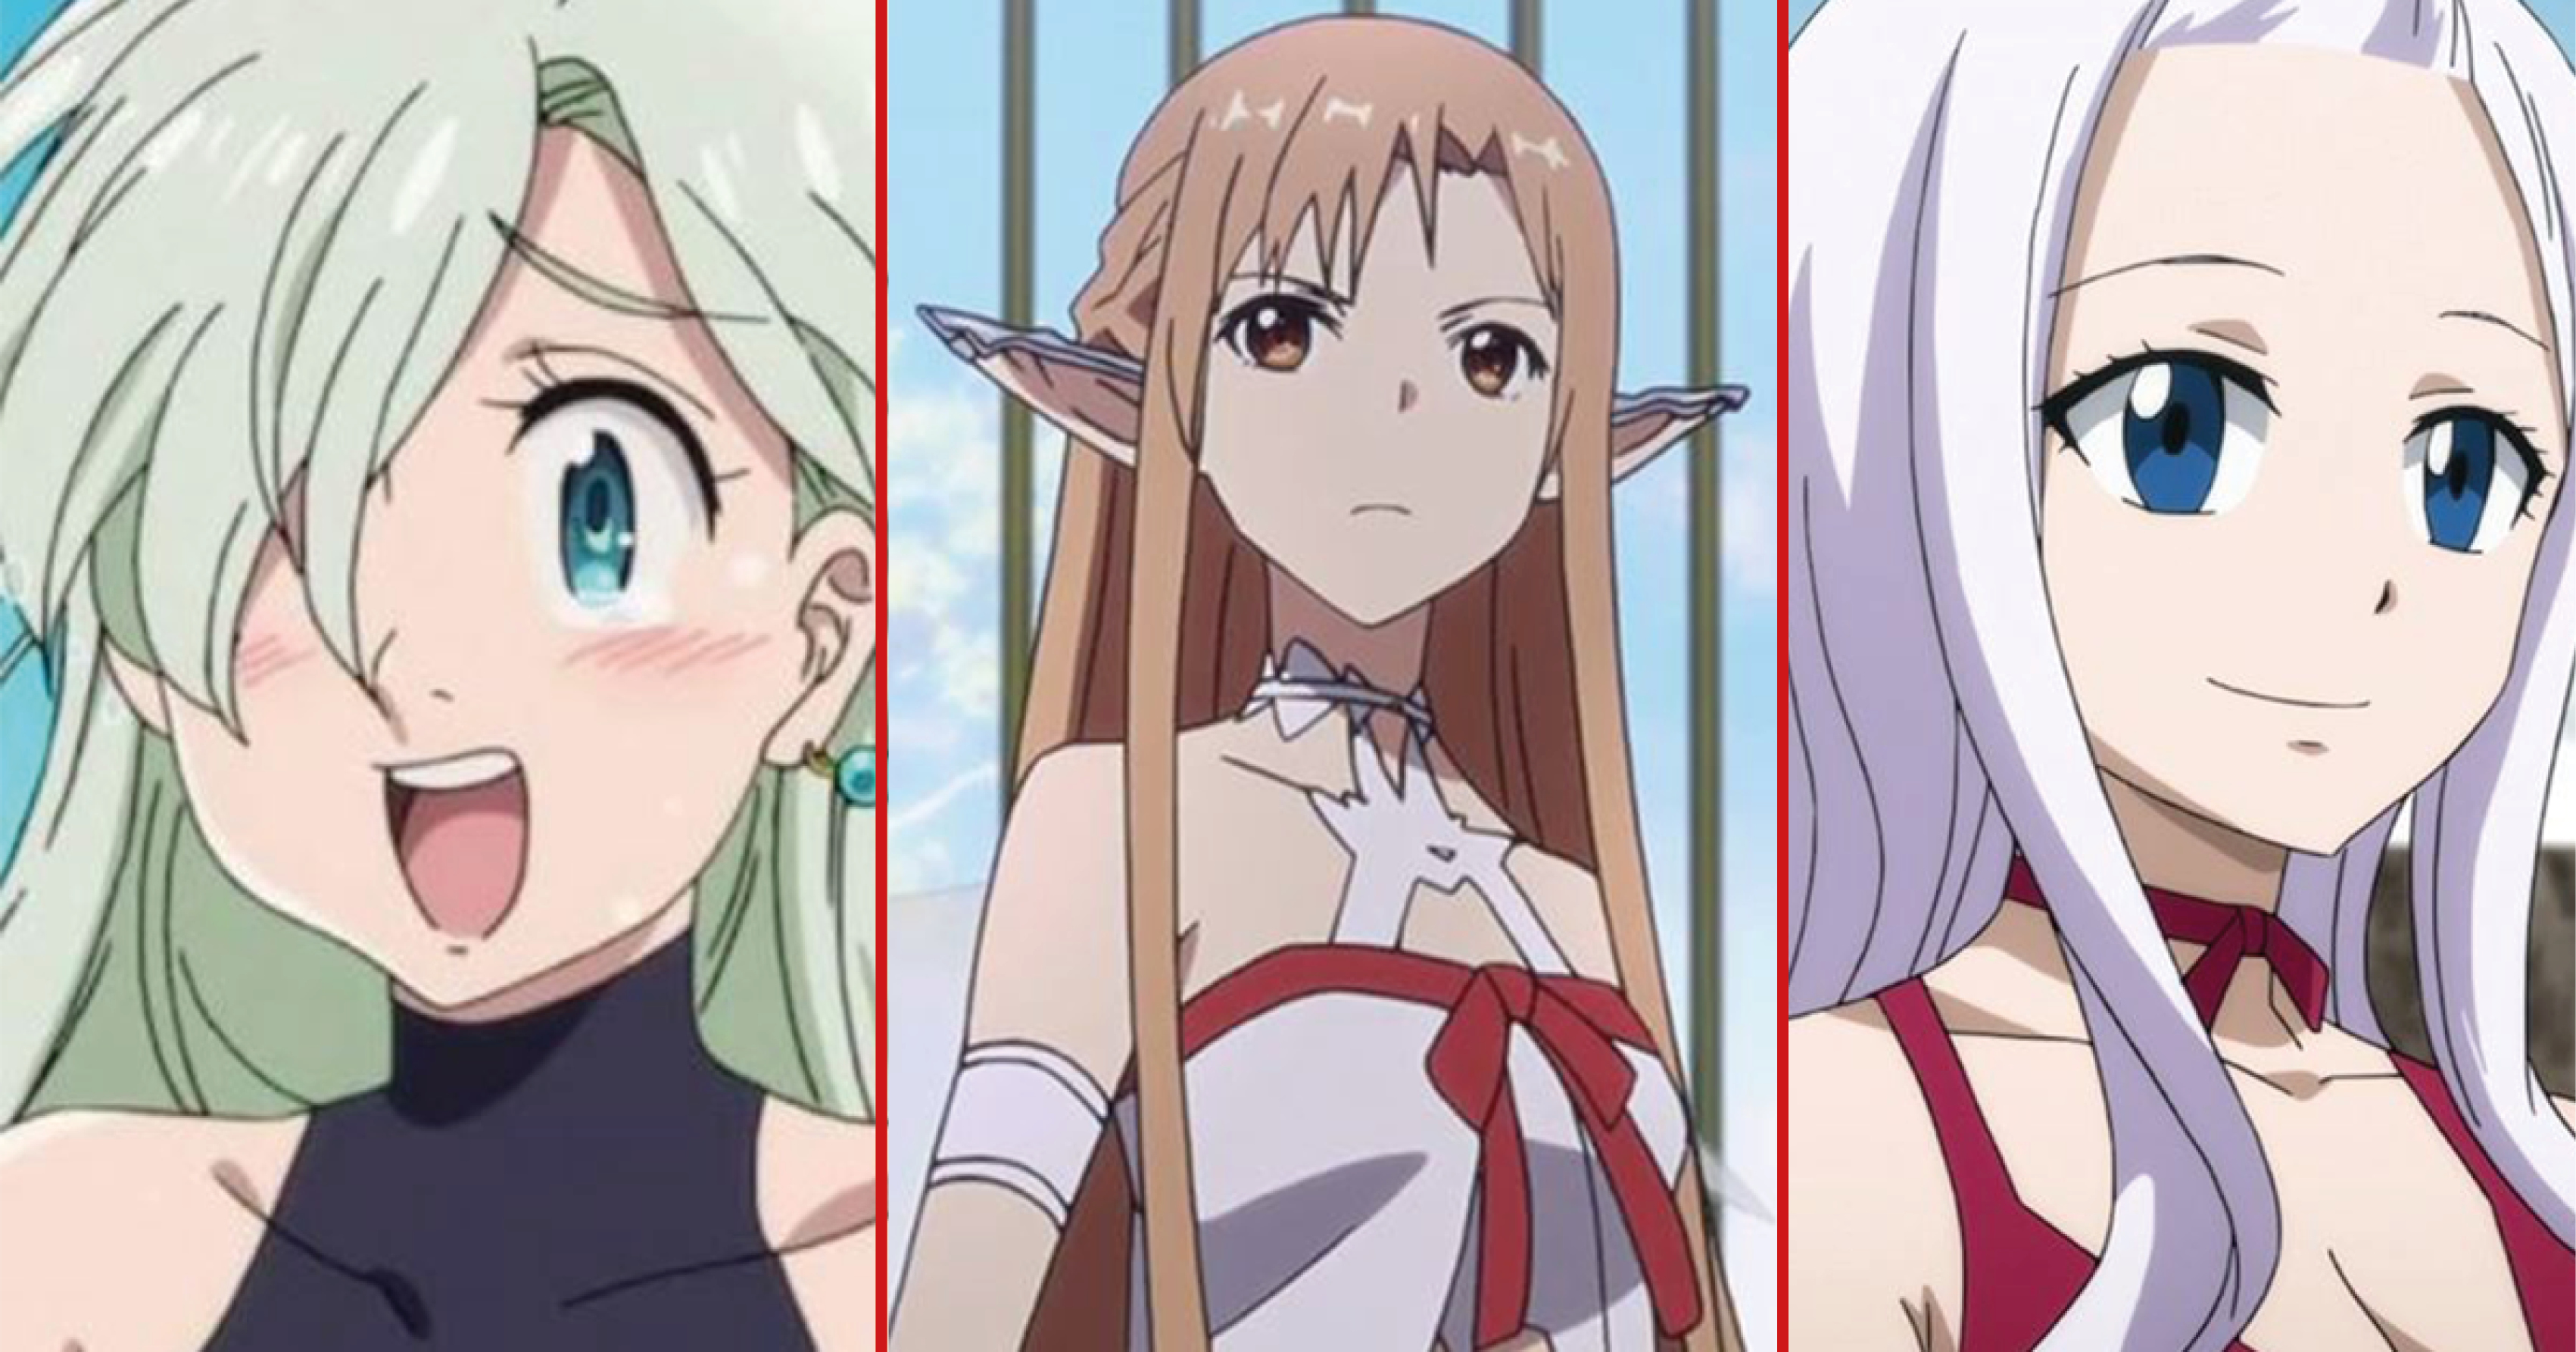 Personnage feminin anime